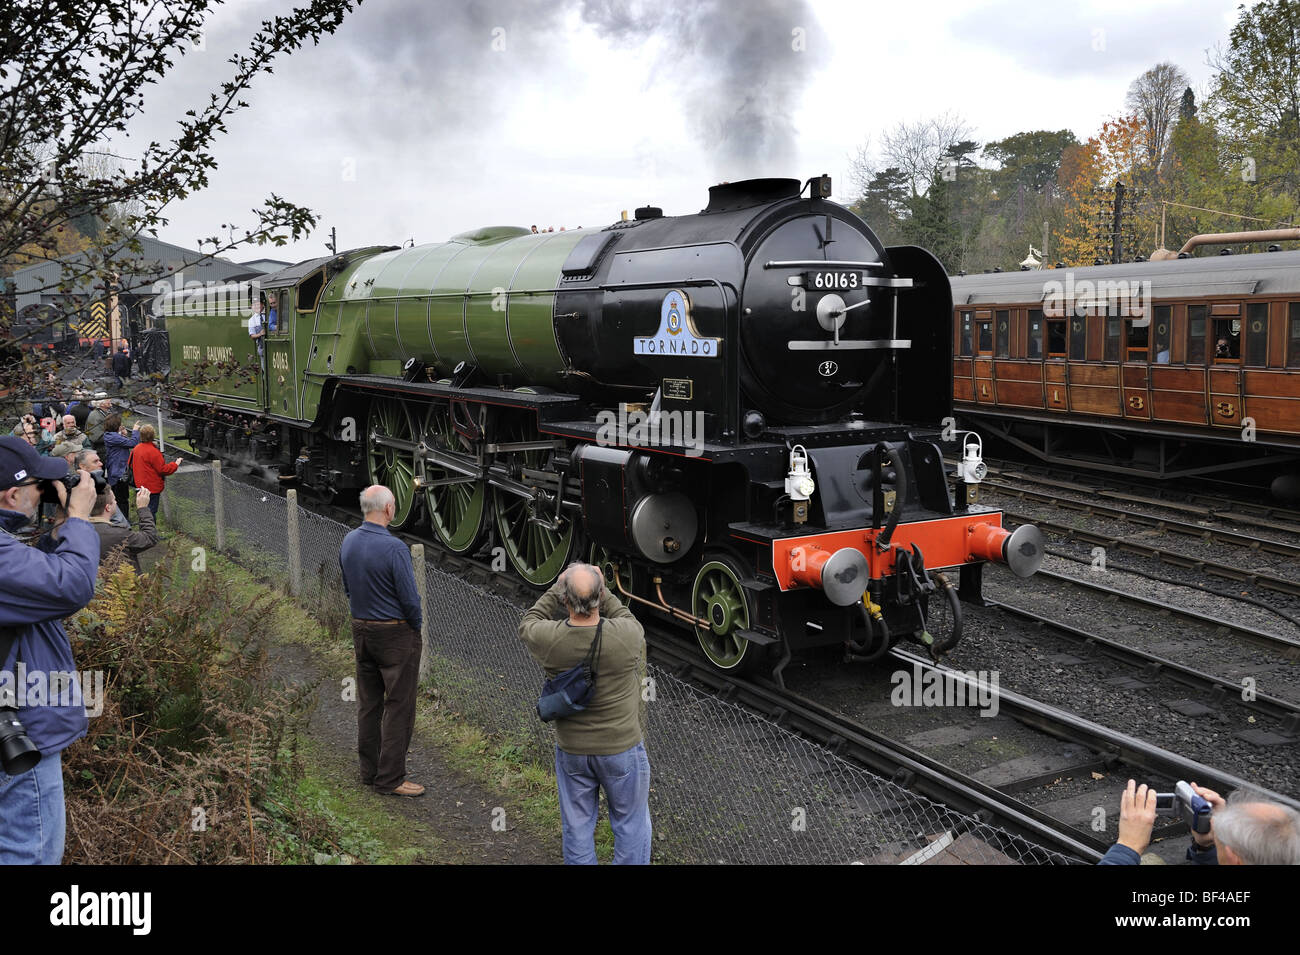 Newly built steam locomotive, Tornado, at Bridgnorth Station on the Severn Valley Railway 2009 Stock Photo